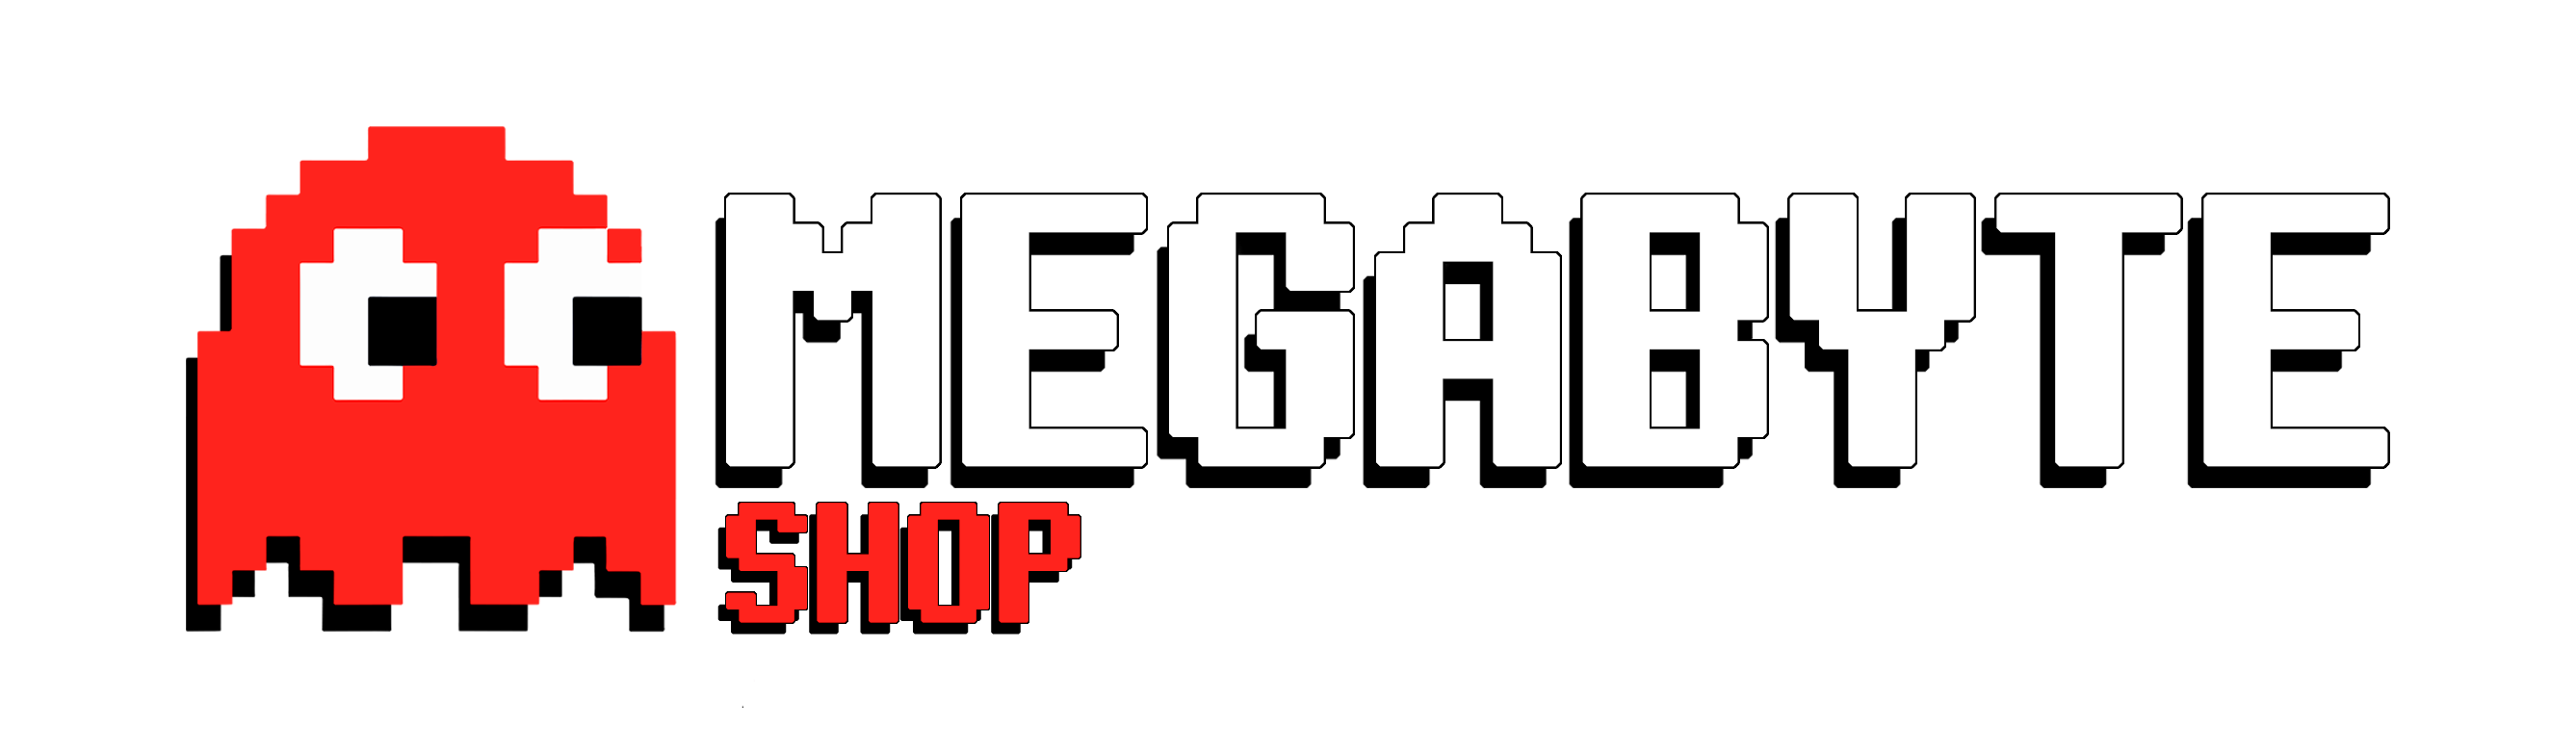 Megabyte Shop